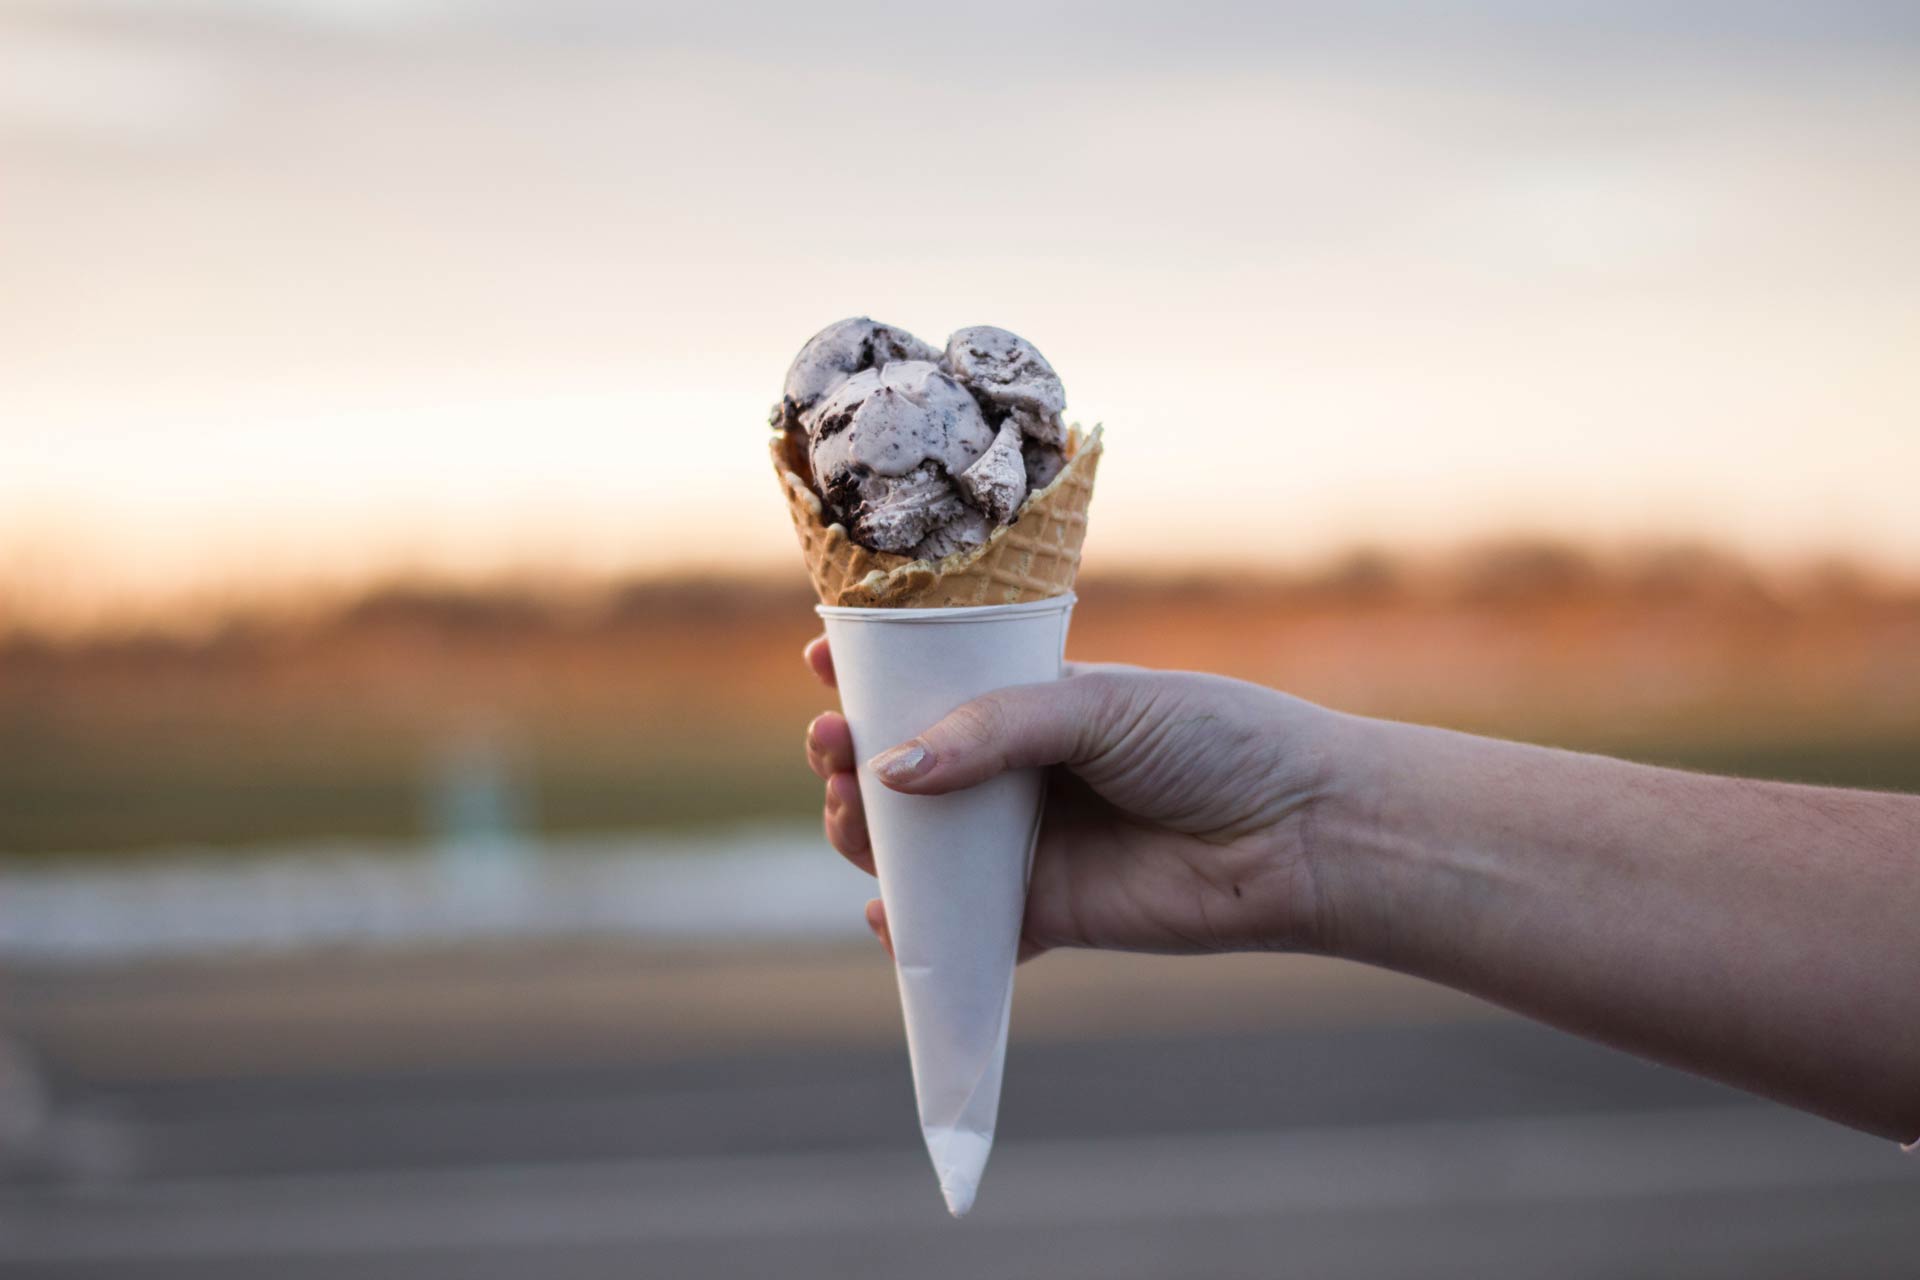 icecream cone in someones hand